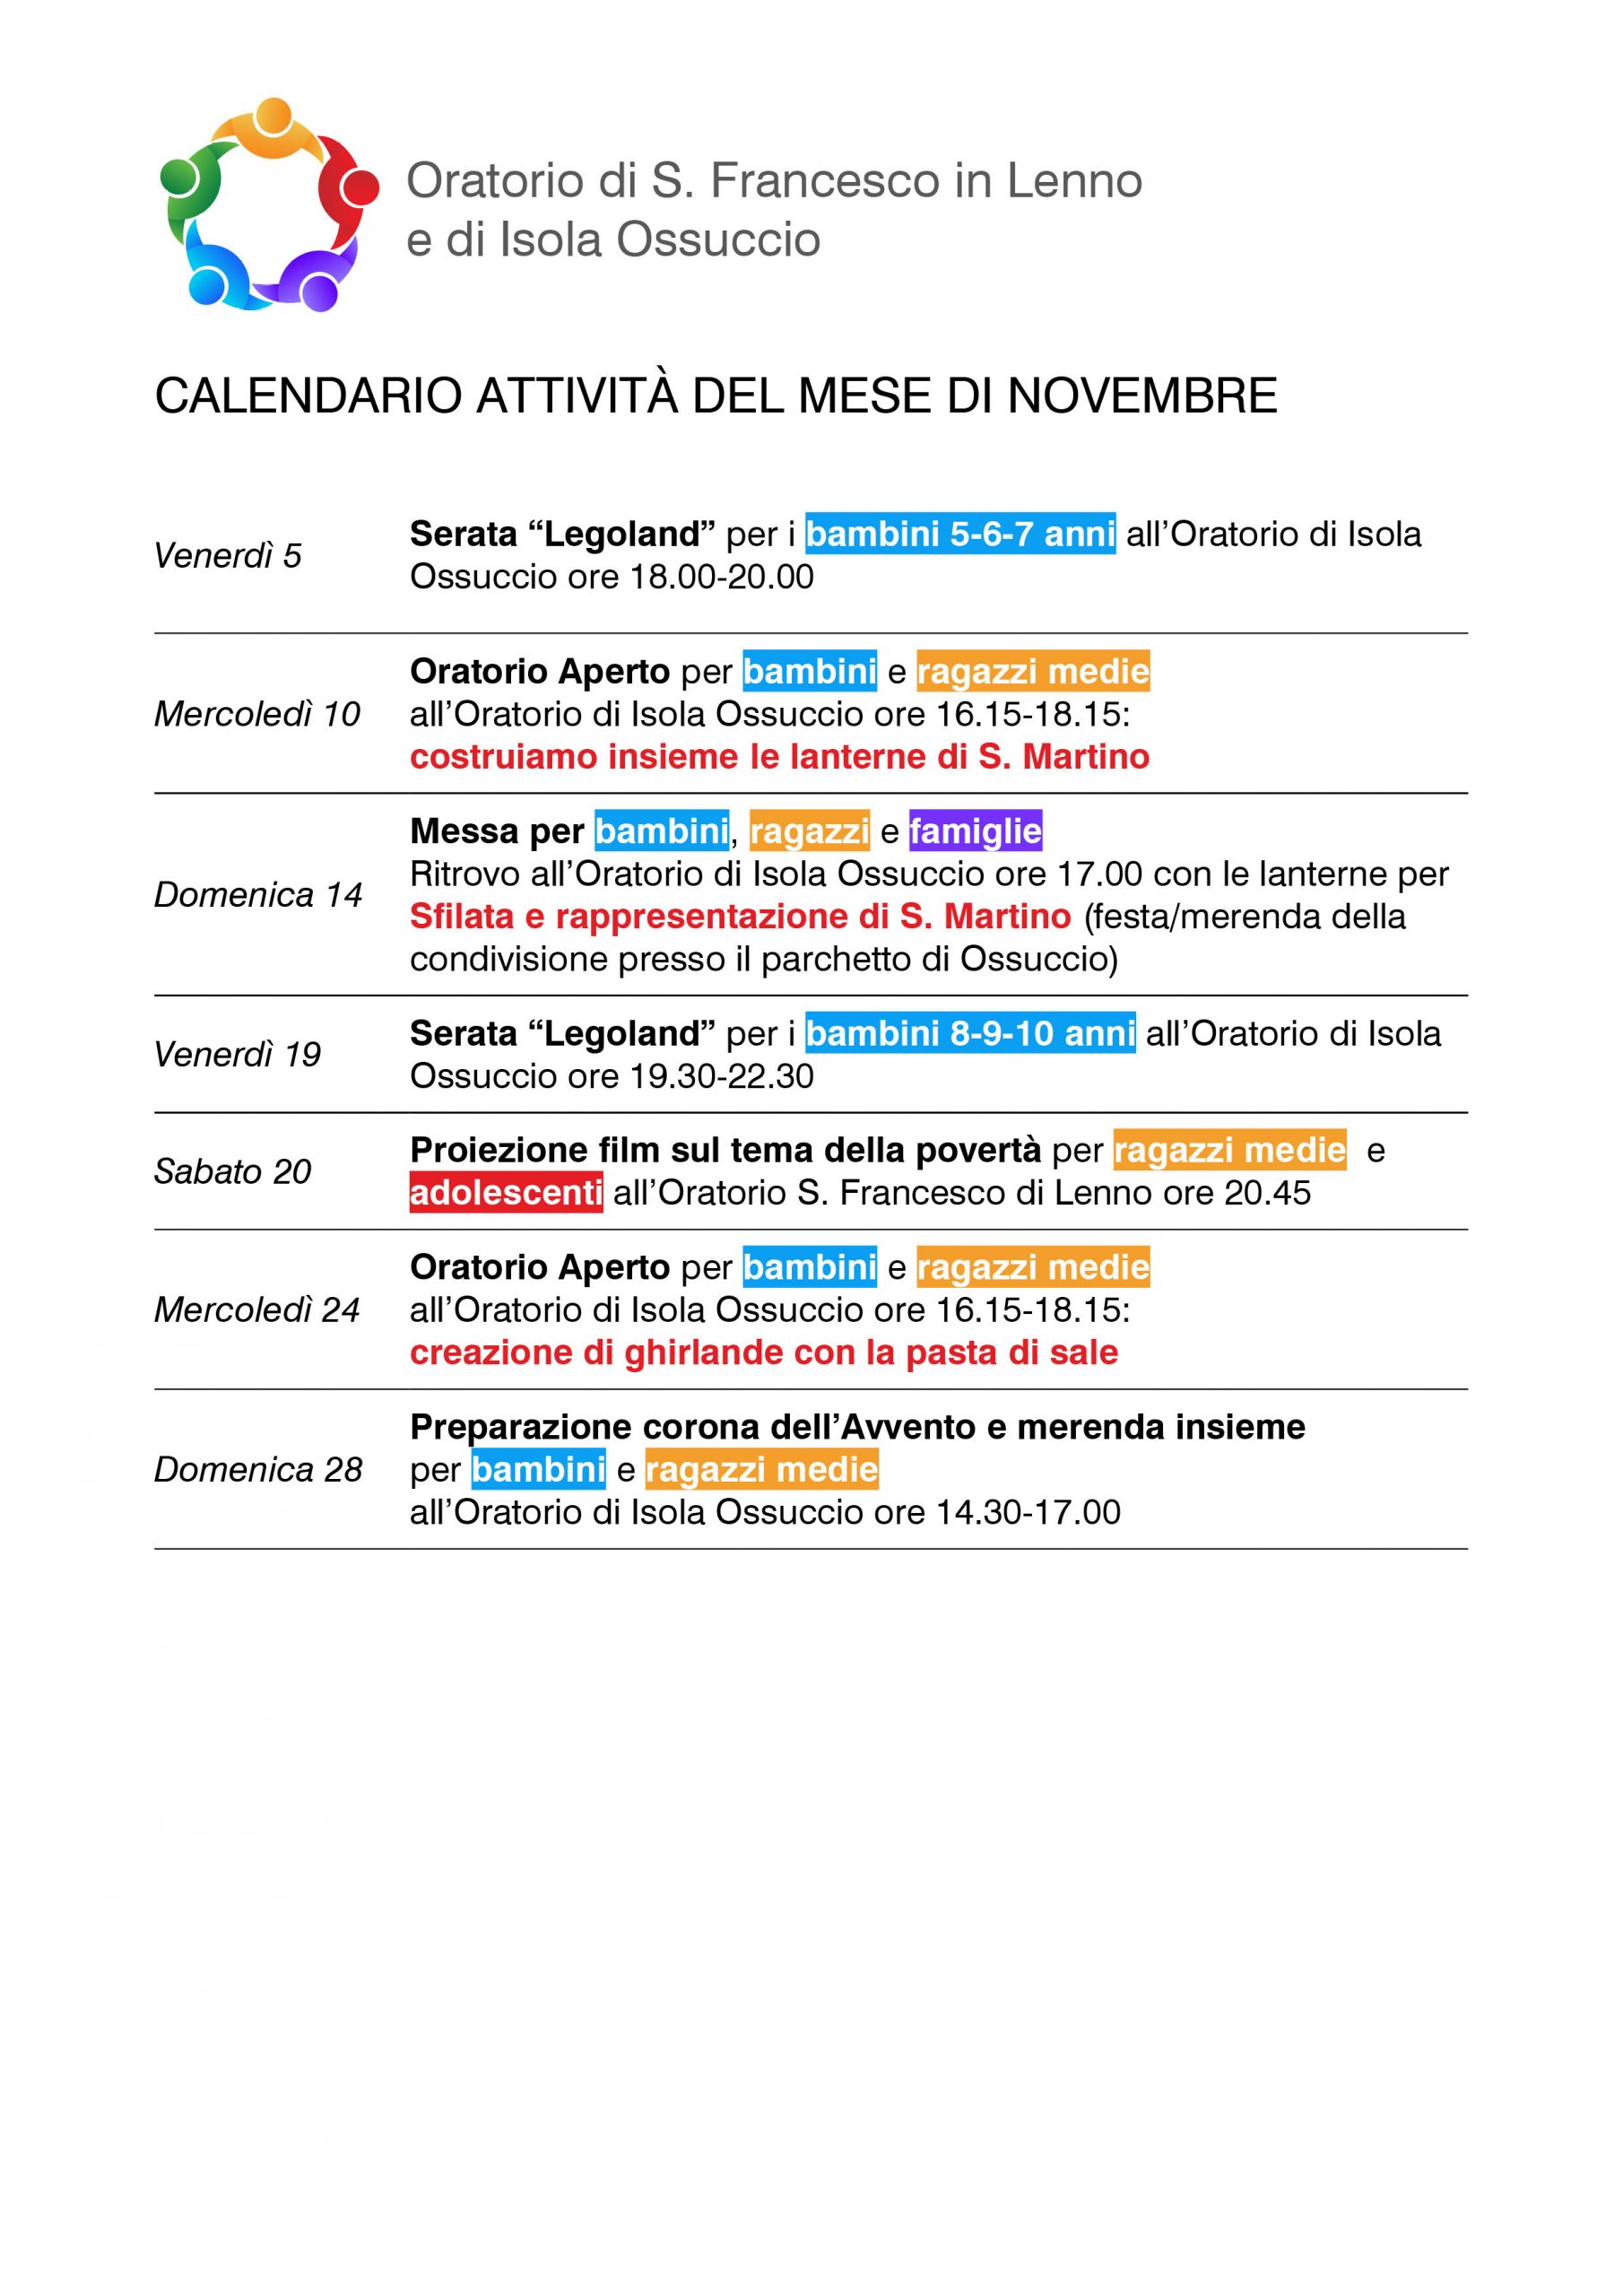 Microsoft Word - Oratorio calendario novembre2021